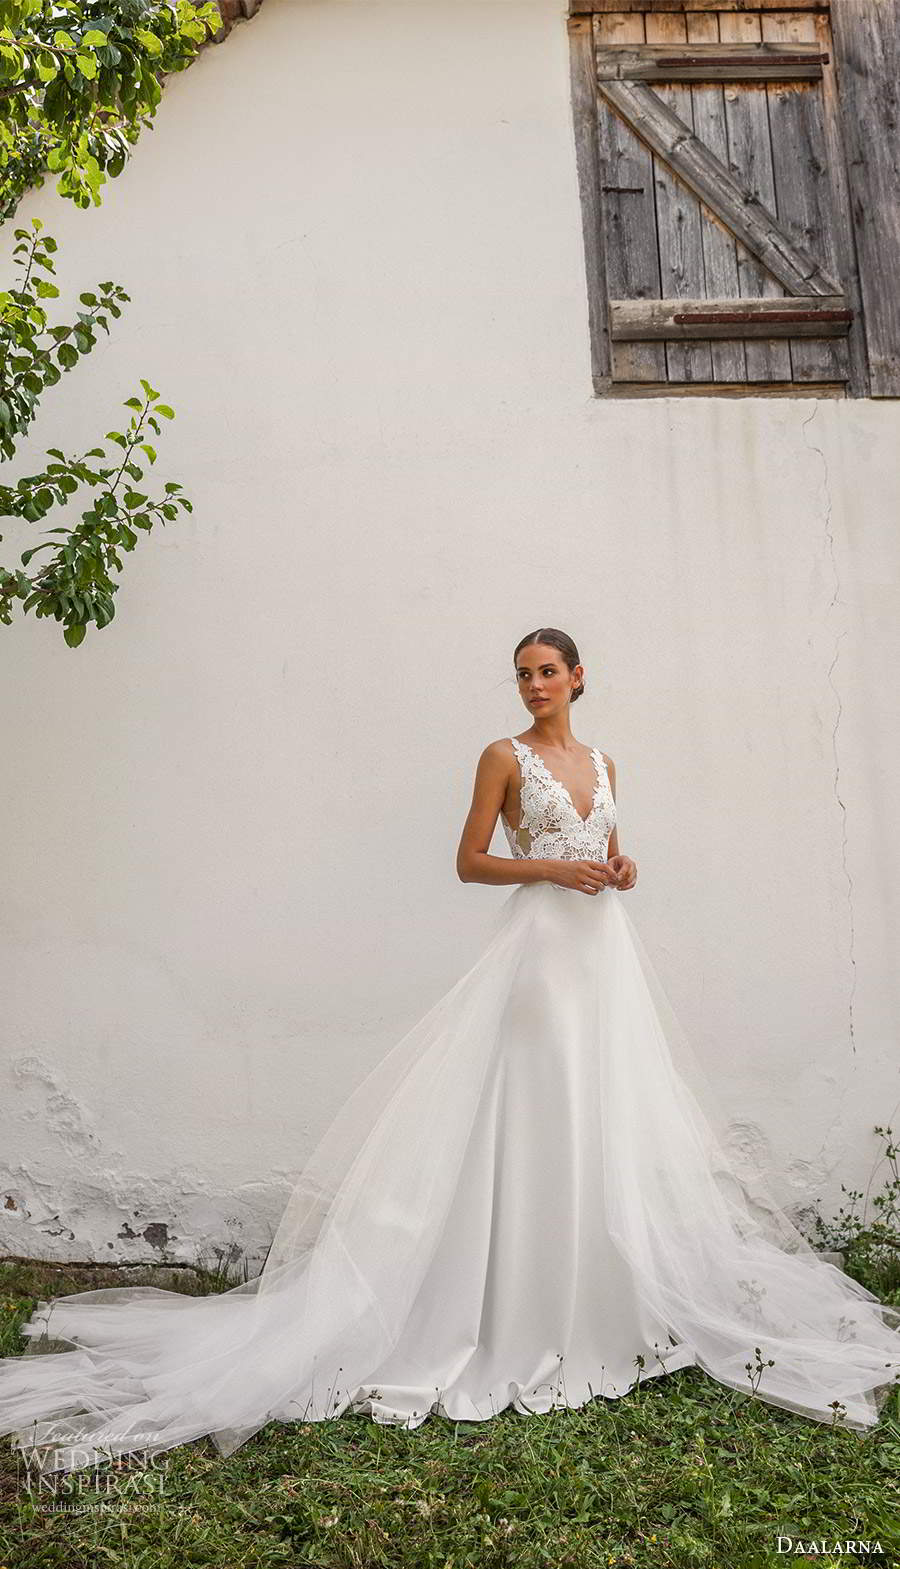 daalarna fall 2020 bridal sleeveless straps v neckline embellished lace bodice sheath wedding dress ball gown overskirt cathedral train (23) mv